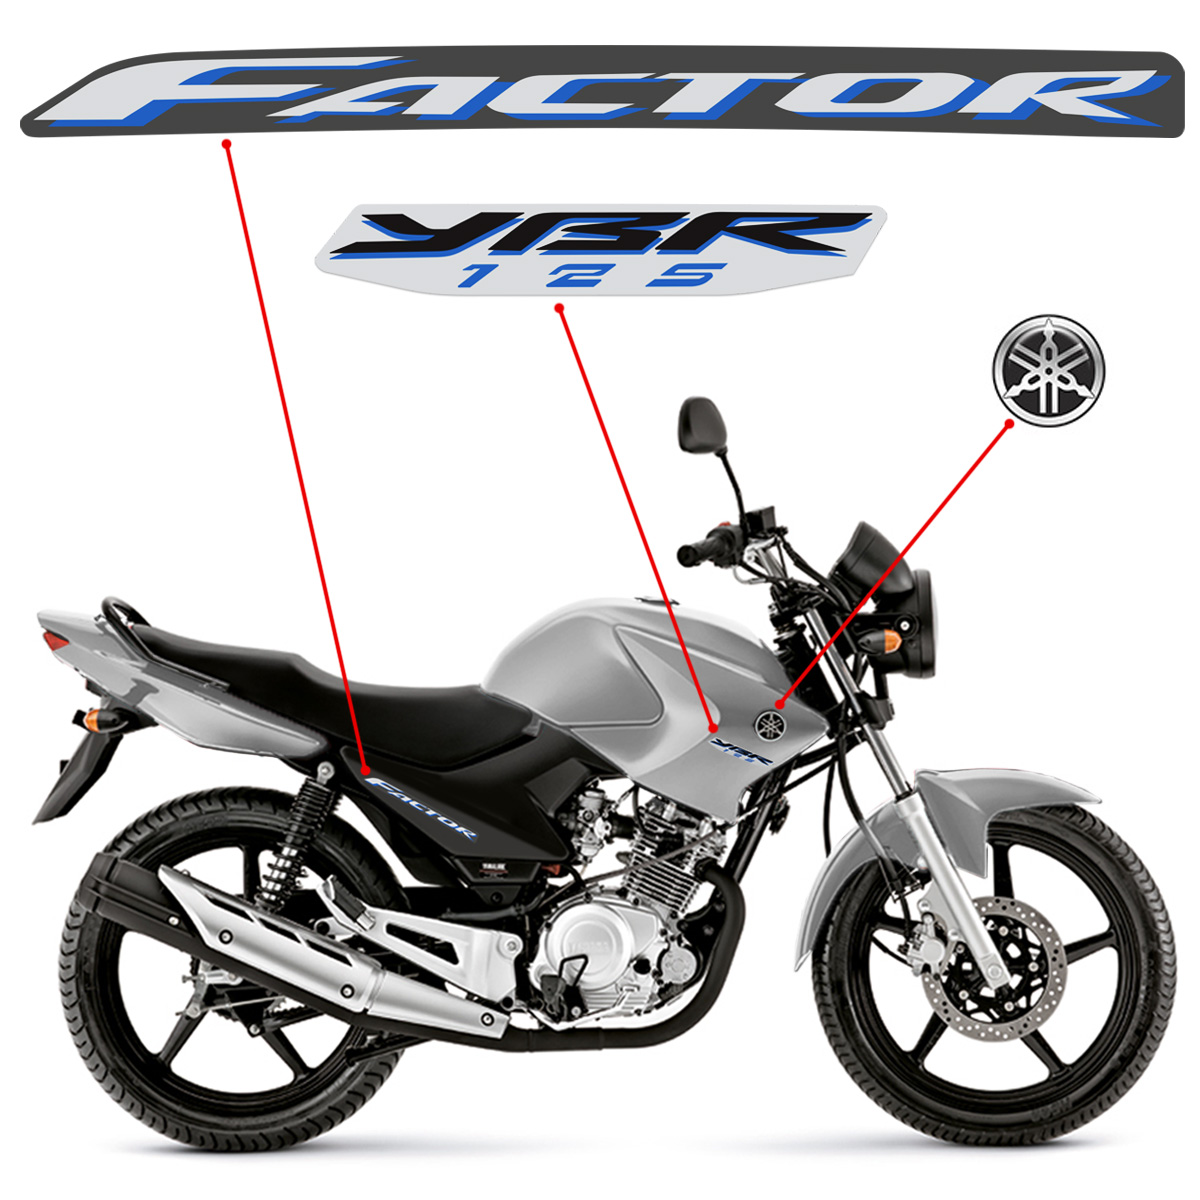 Adesivos Yamaha Ybr 125 Factor 2009 Moto Prata + Emblemas